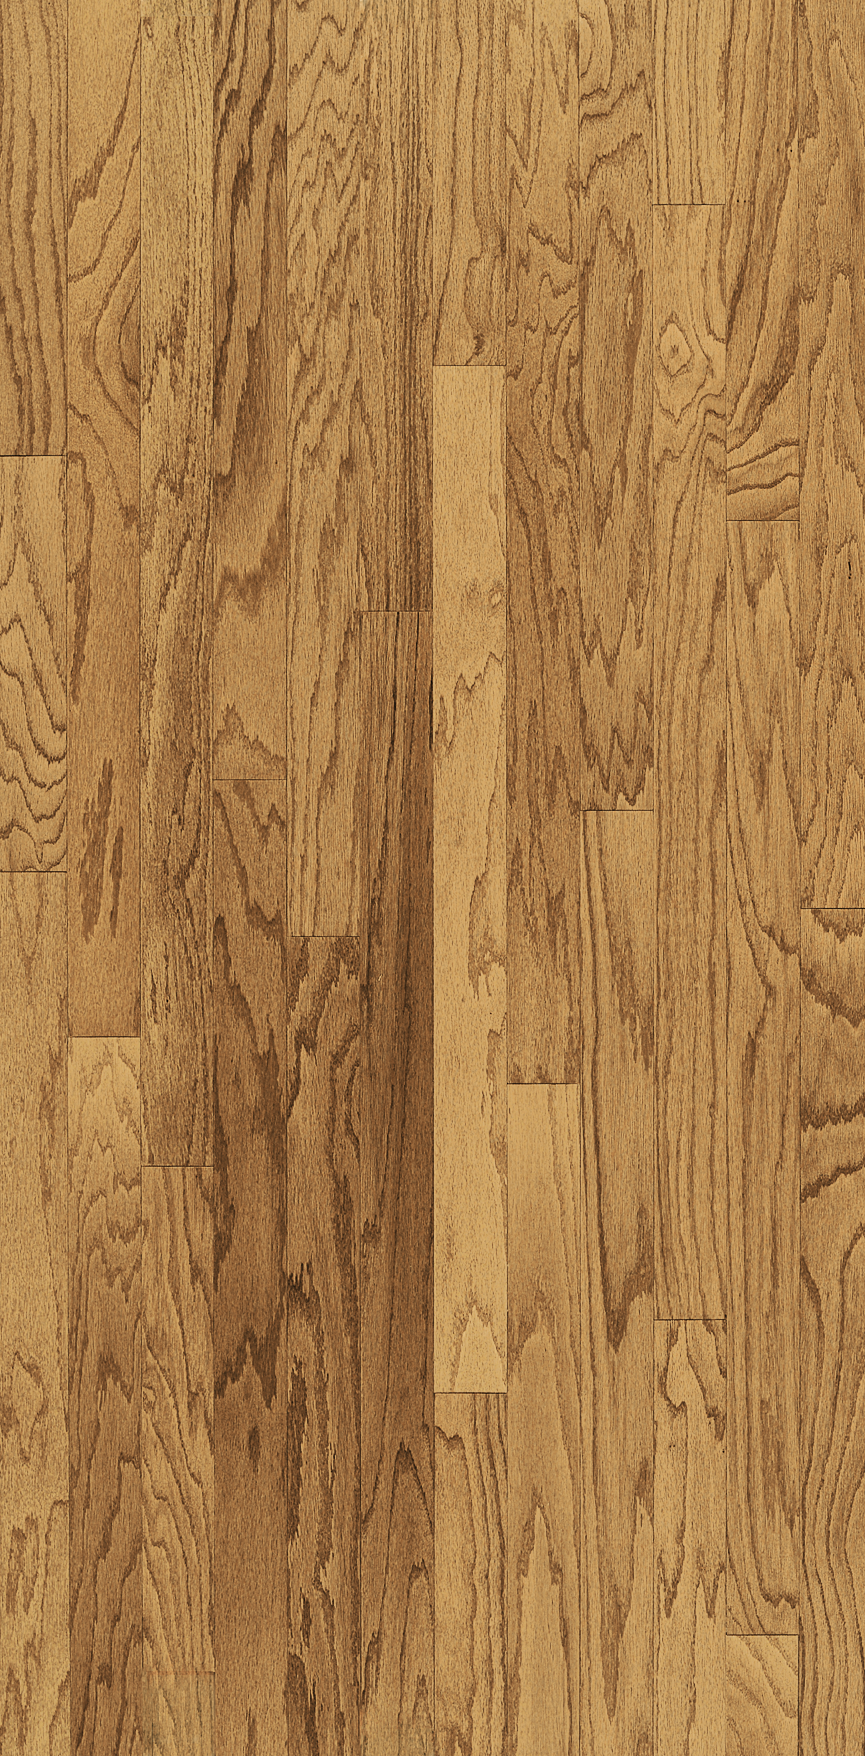 Harvest 3" - Turlington Collection - Engineered Hardwood Flooring by Bruce